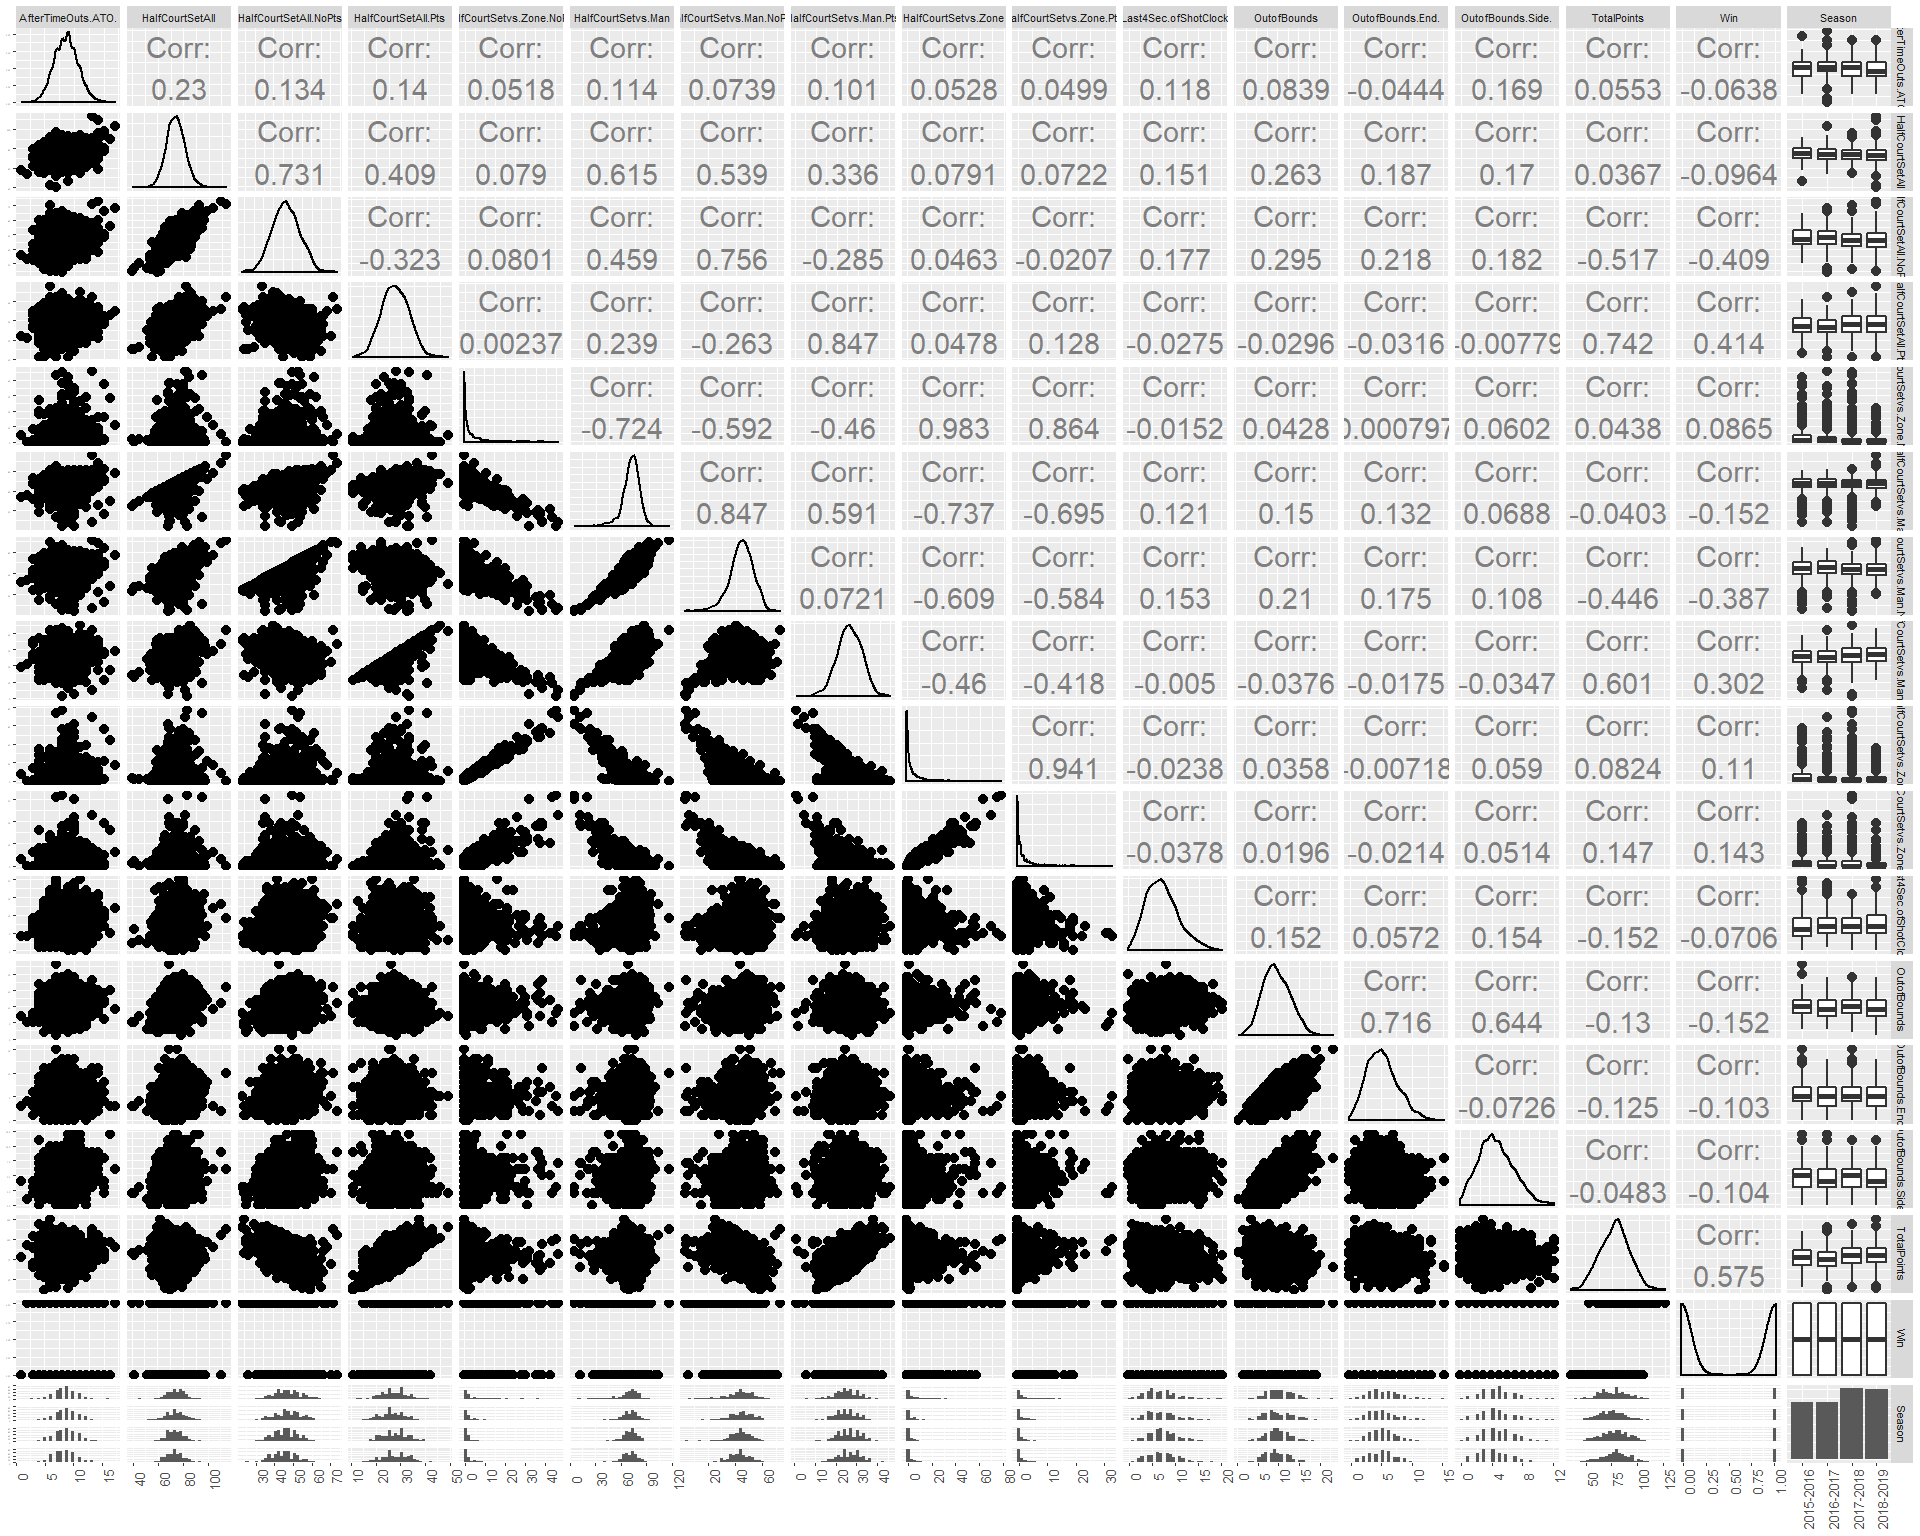 Plot Matrix of Sets Dataset.